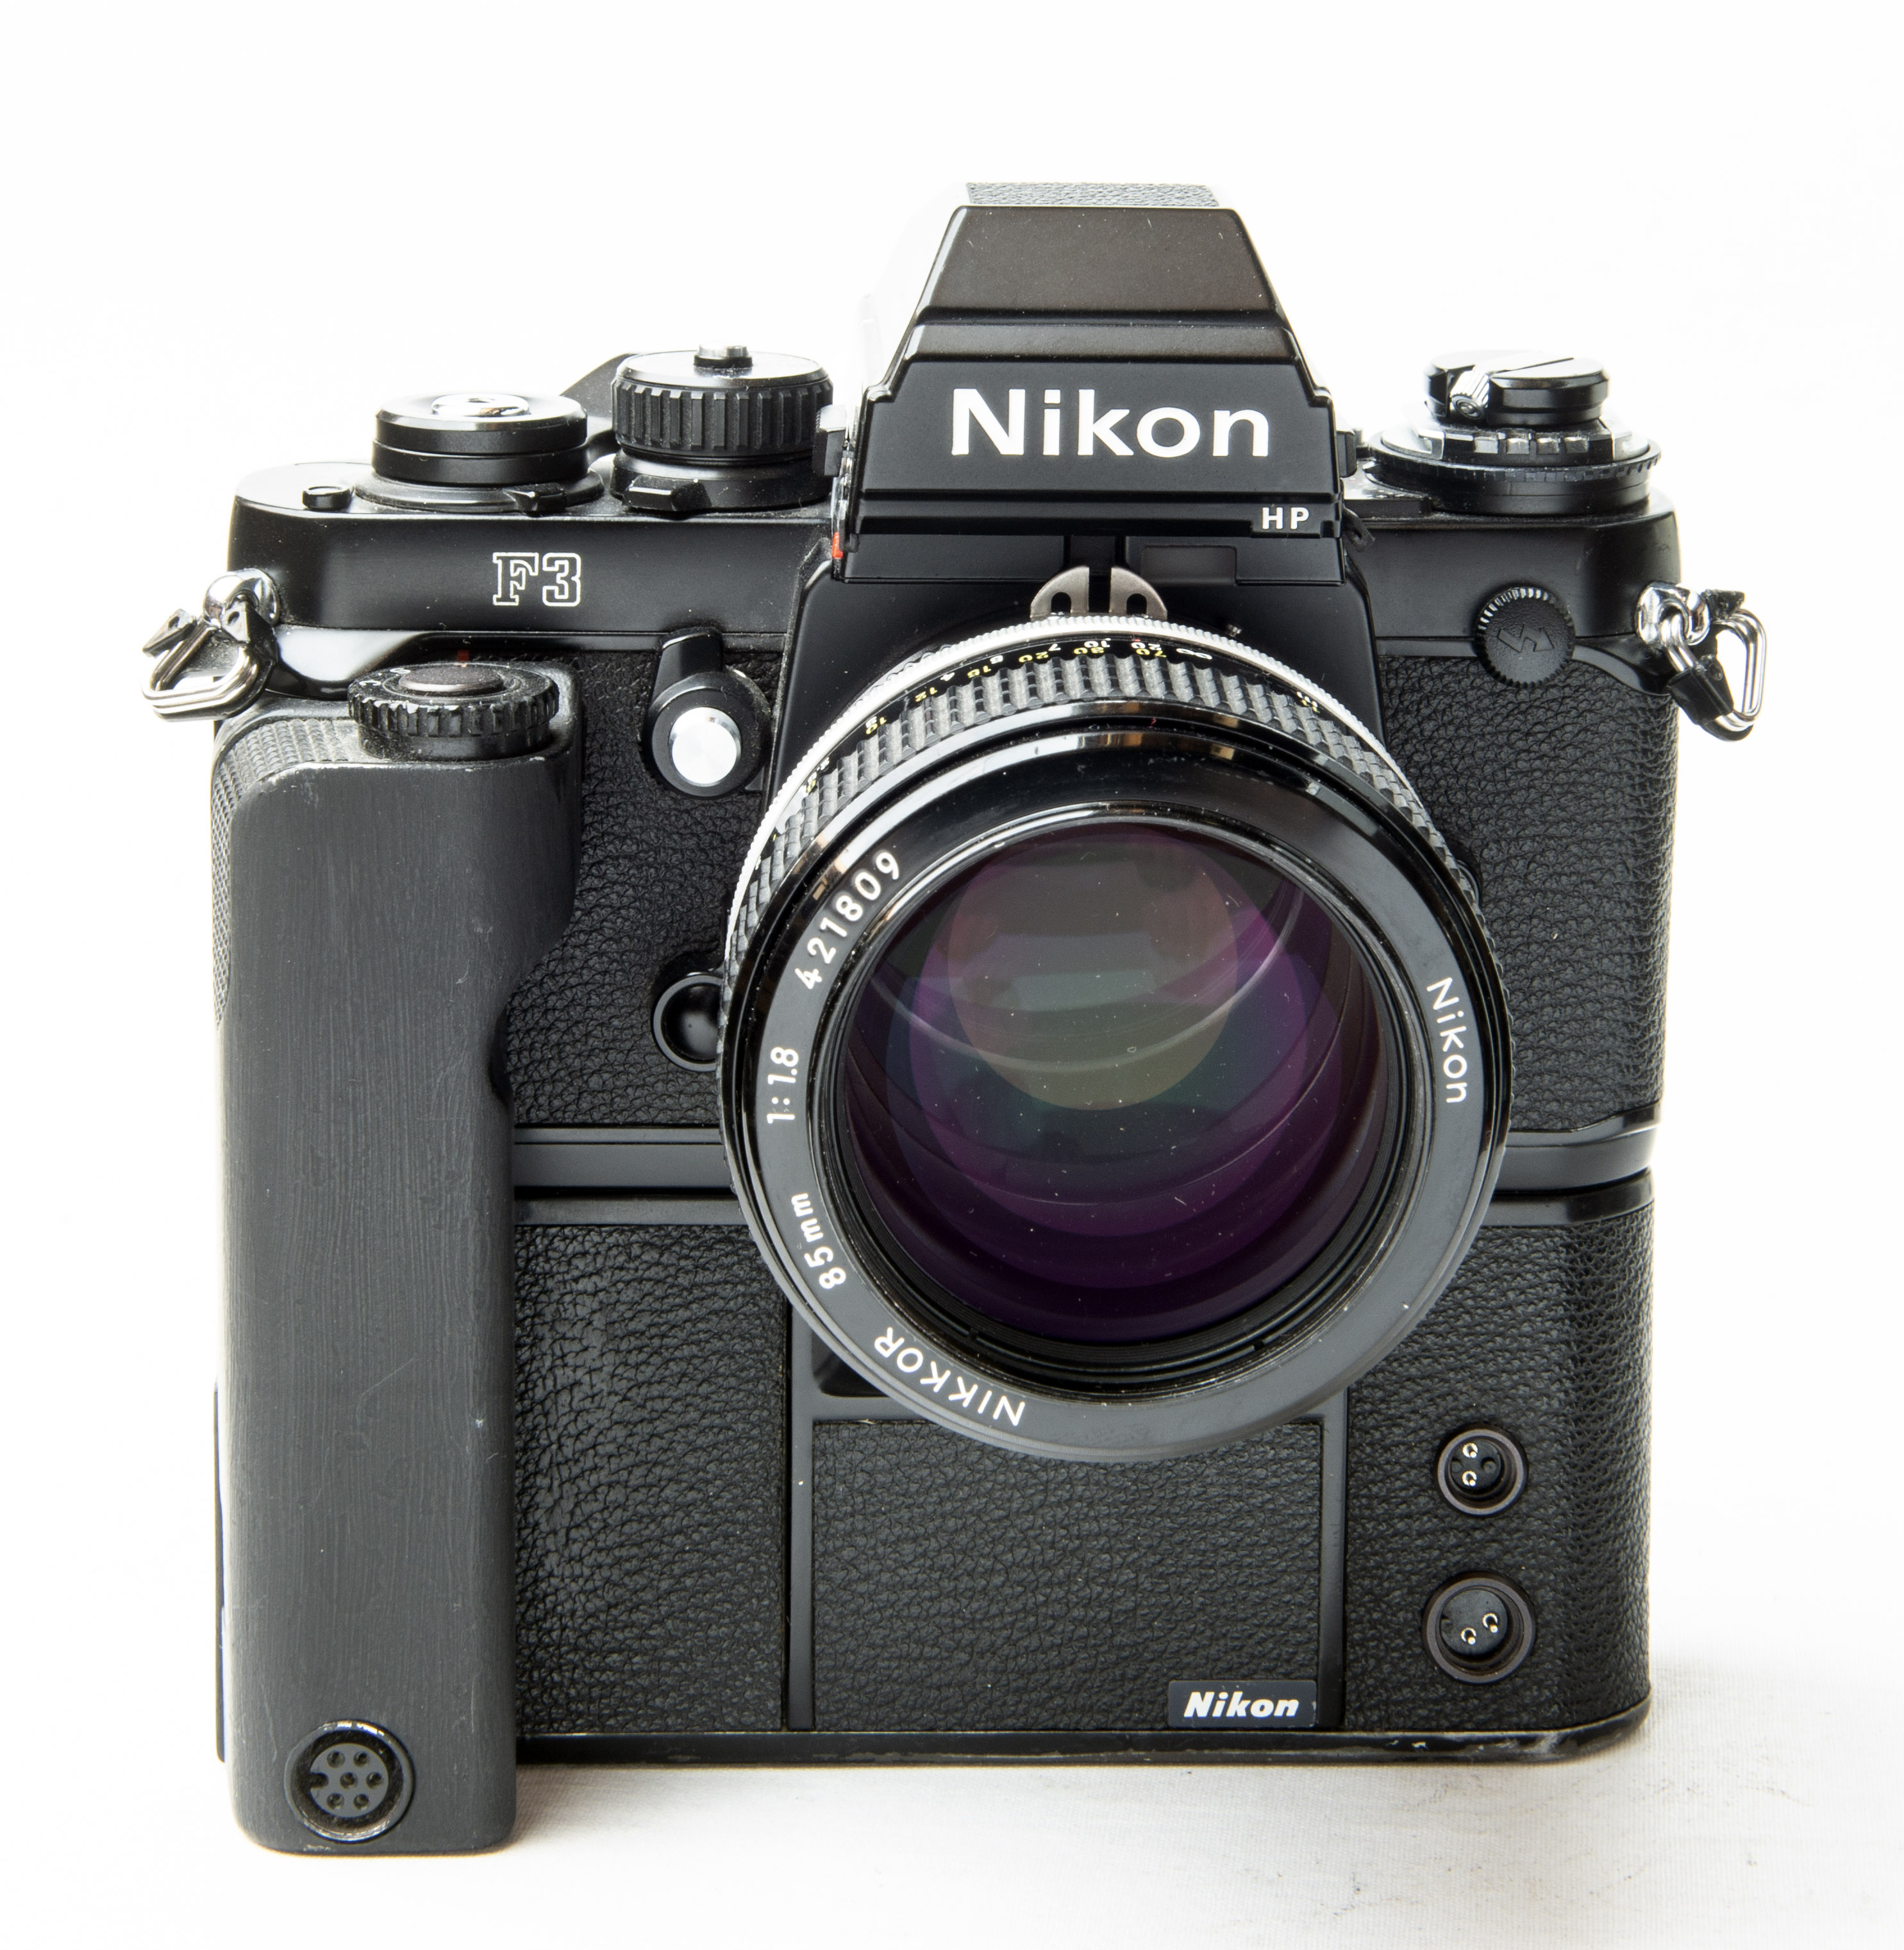 HP F3 Nikon MD-4 - iaa-i.com